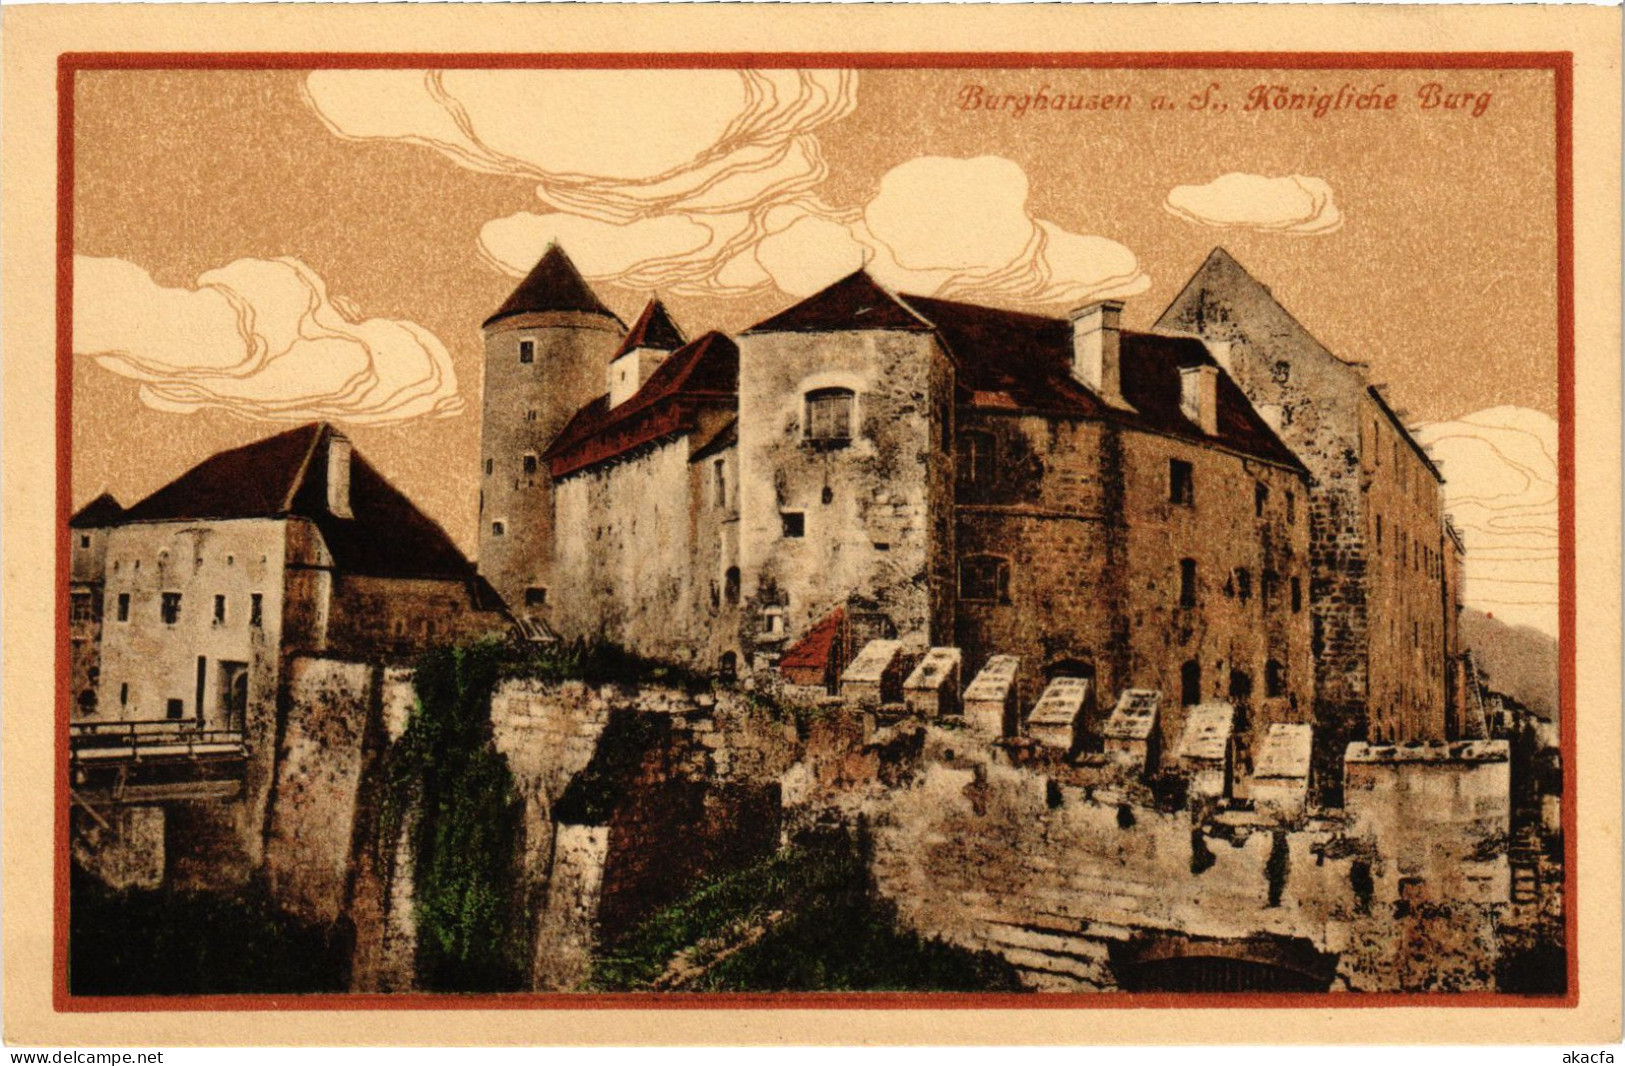 CPA AK Burghausen Konigliche Burg GERMANY (1401103) - Burghausen